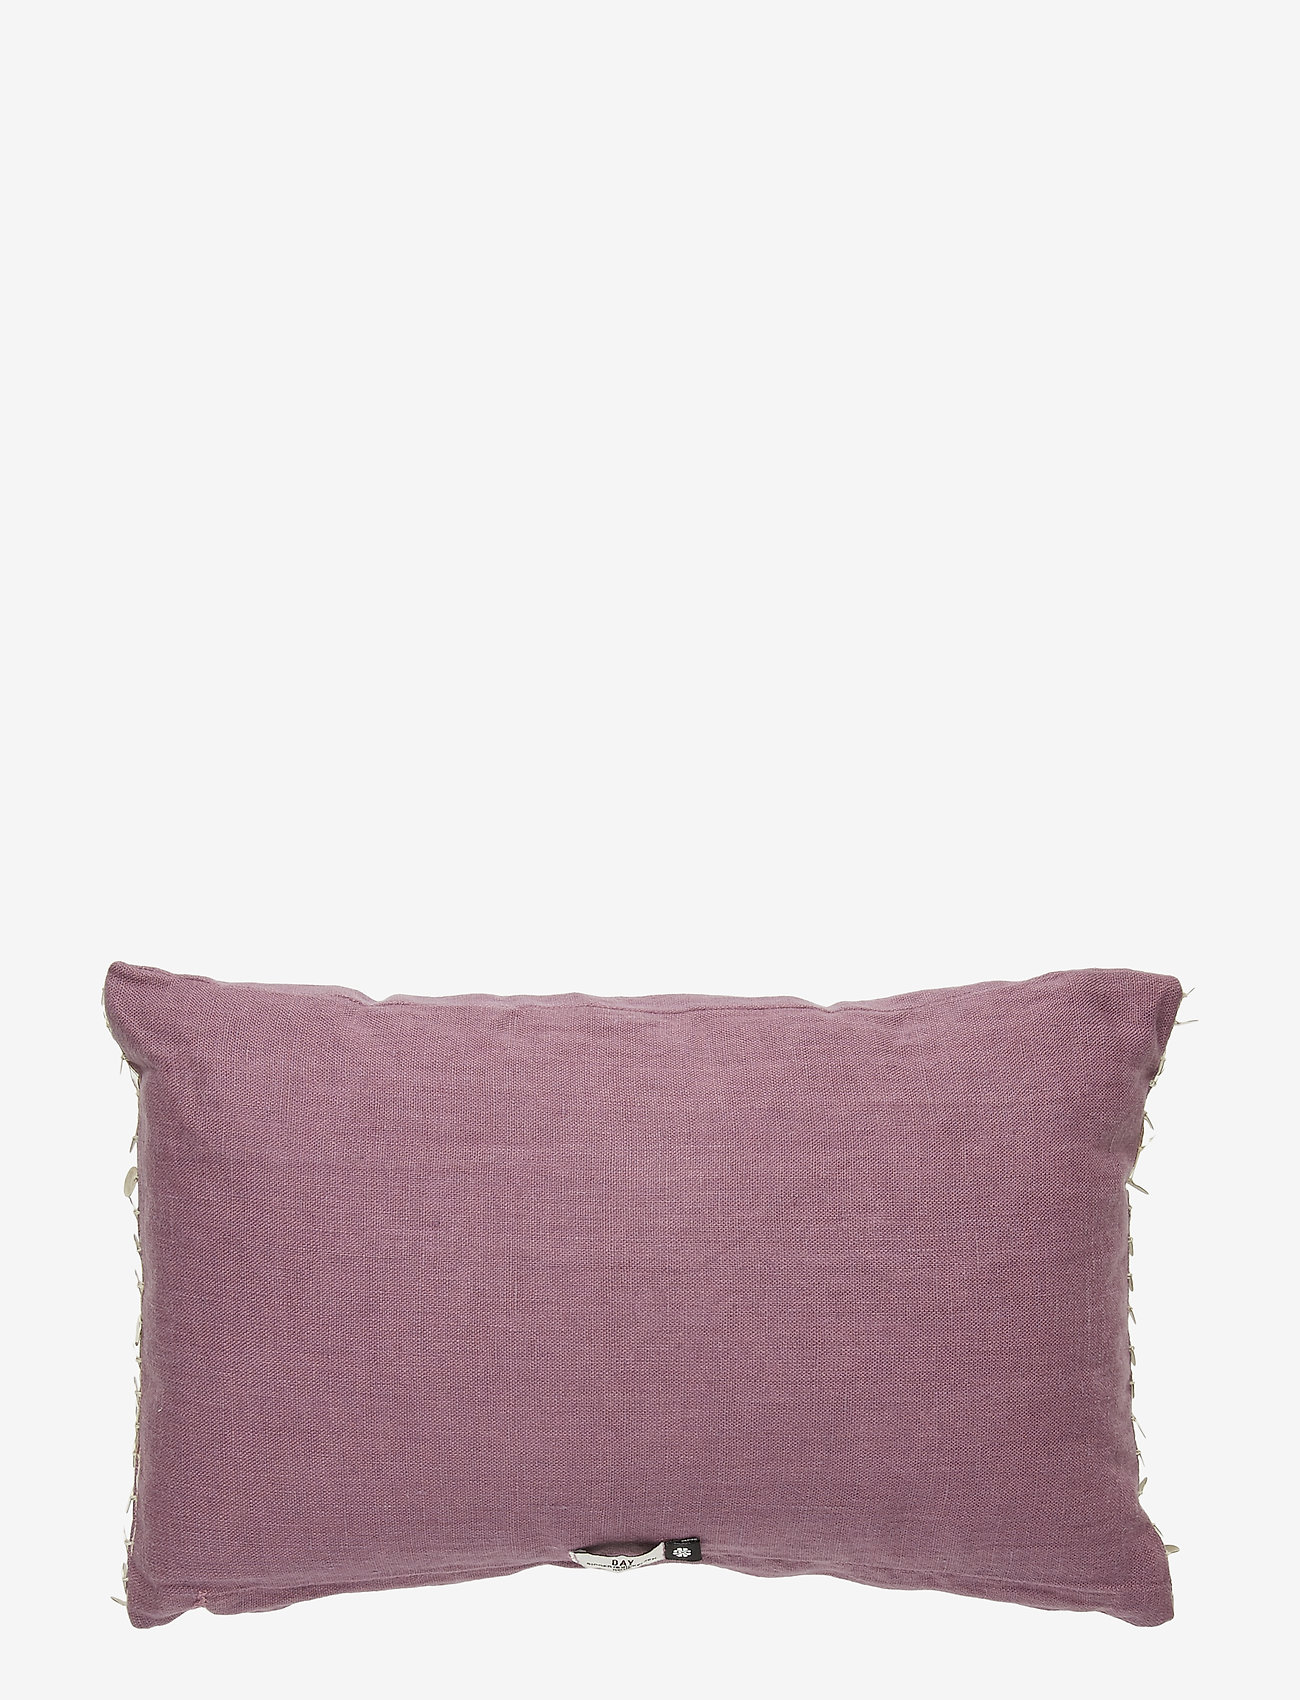 DAY Home - Day Baby Maroc Cushion Cover - kissenbezüge - lilac - 1